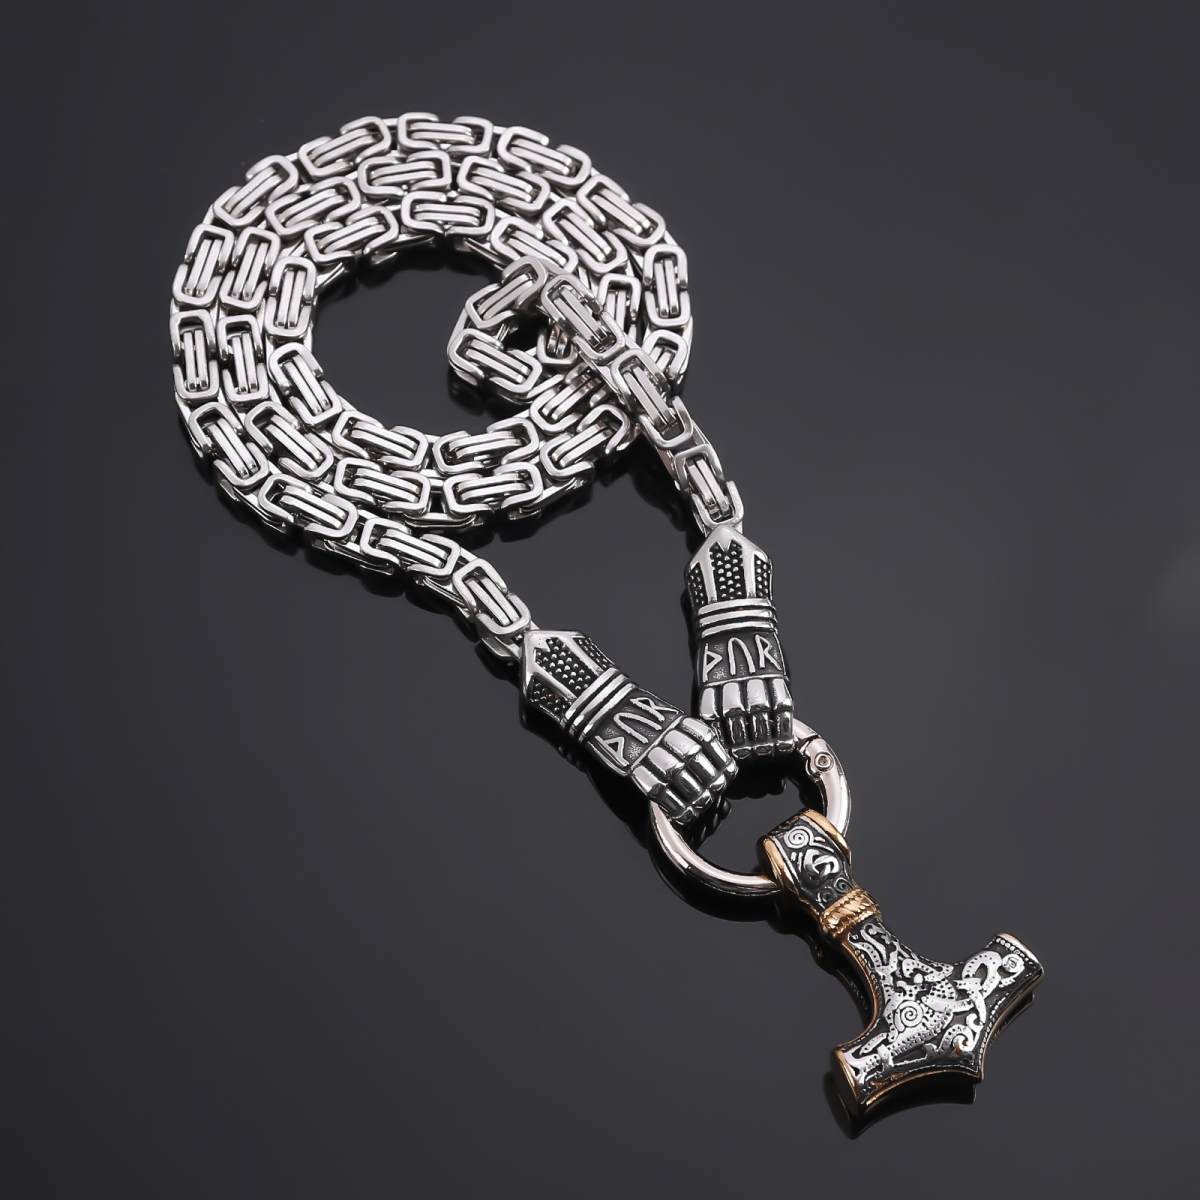 Mjolnir Necklace US$10/PC-NORSECOLLECTION- Viking Jewelry,Viking Necklace,Viking Bracelet,Viking Rings,Viking Mugs,Viking Accessories,Viking Crafts